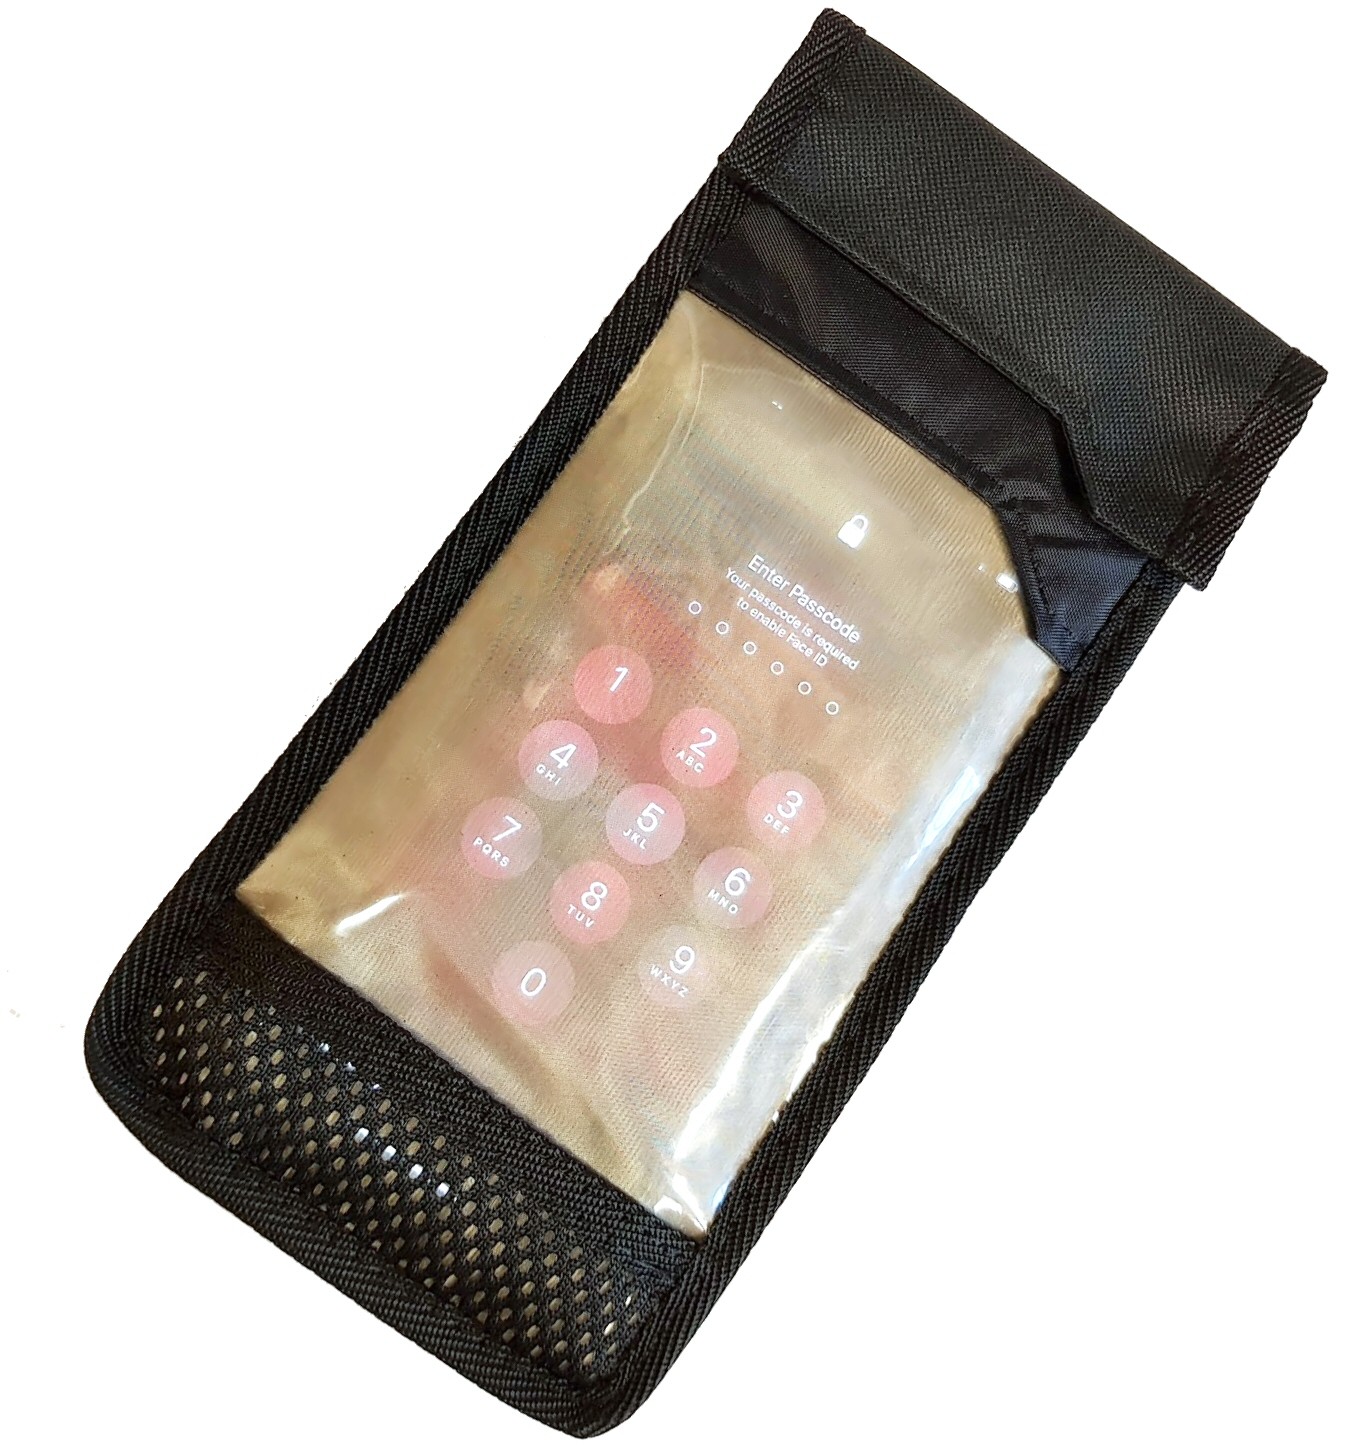 Disklabs Phone Shield Lab Edition Faraday Bag (PS2)